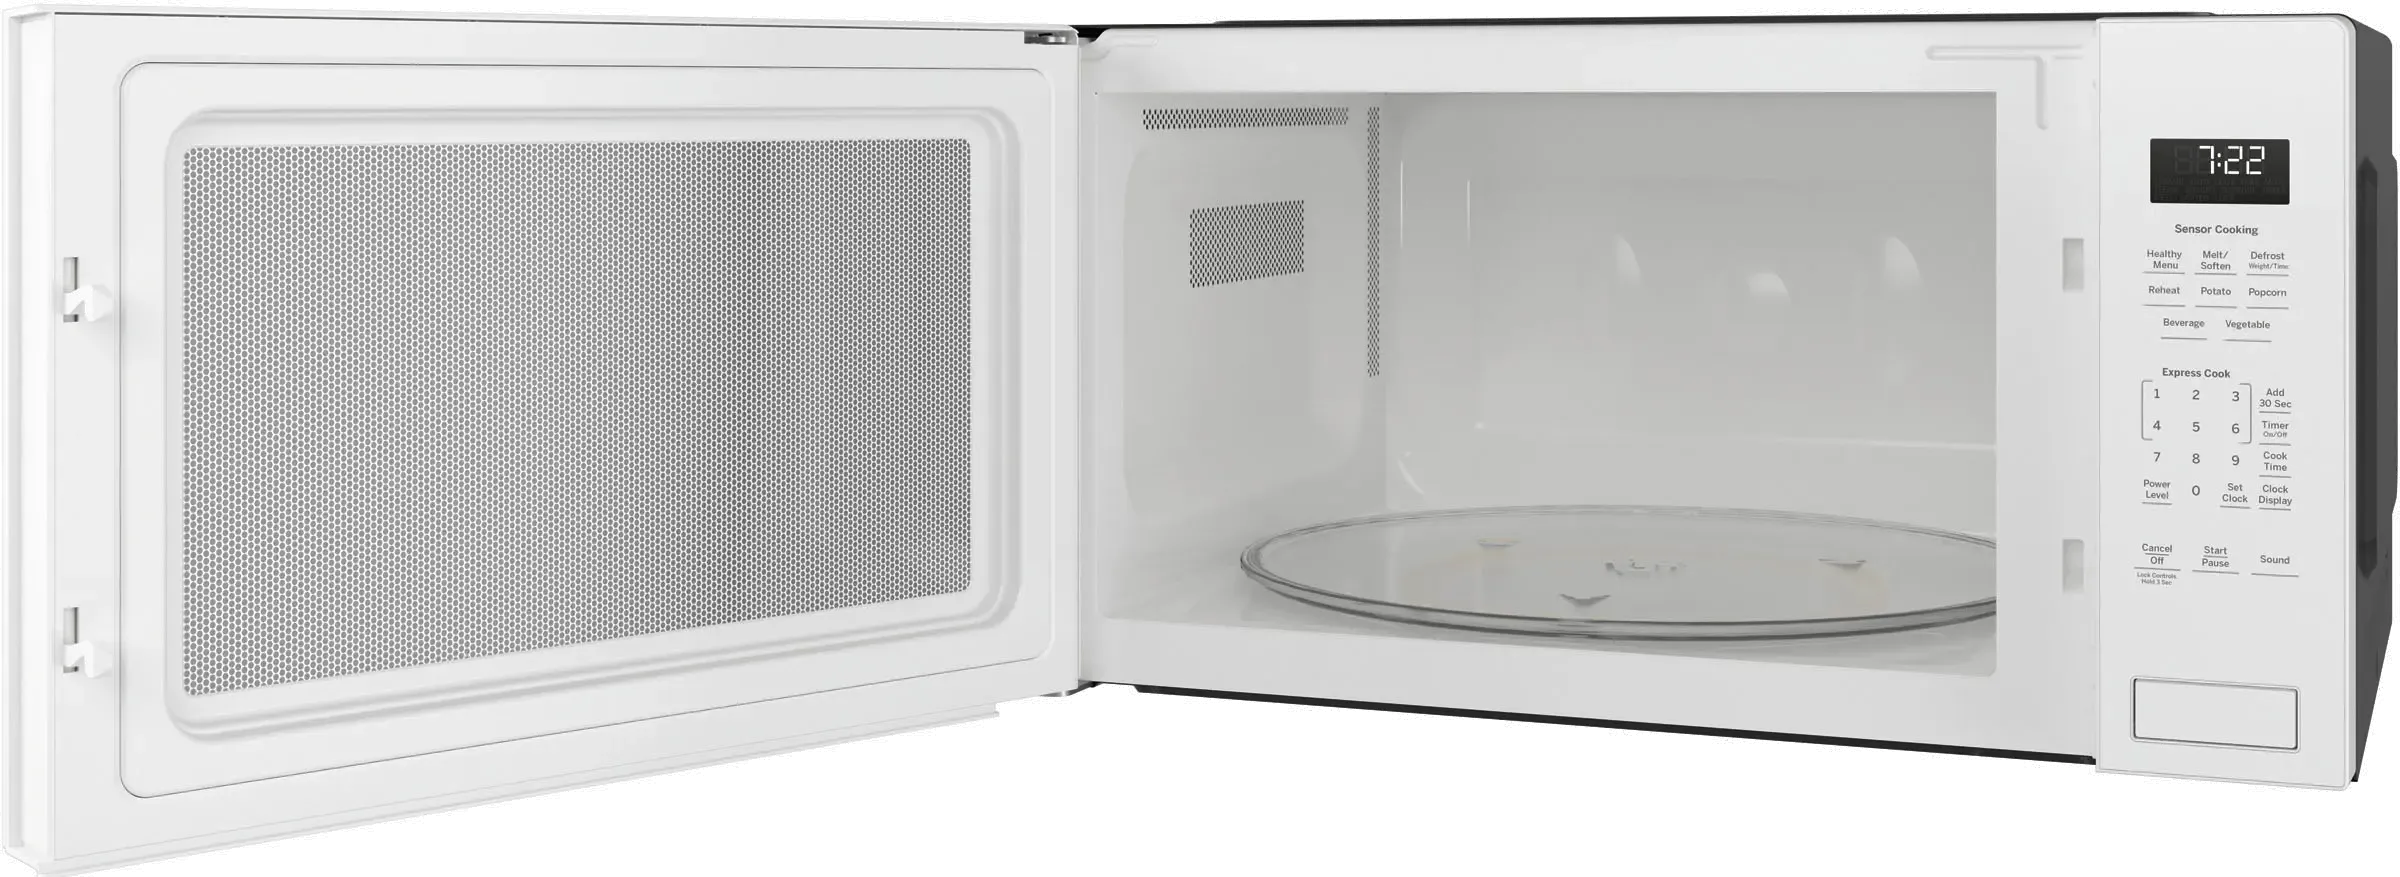 GE Profile Countertop Microwave - 2.2 Cu. Ft. White